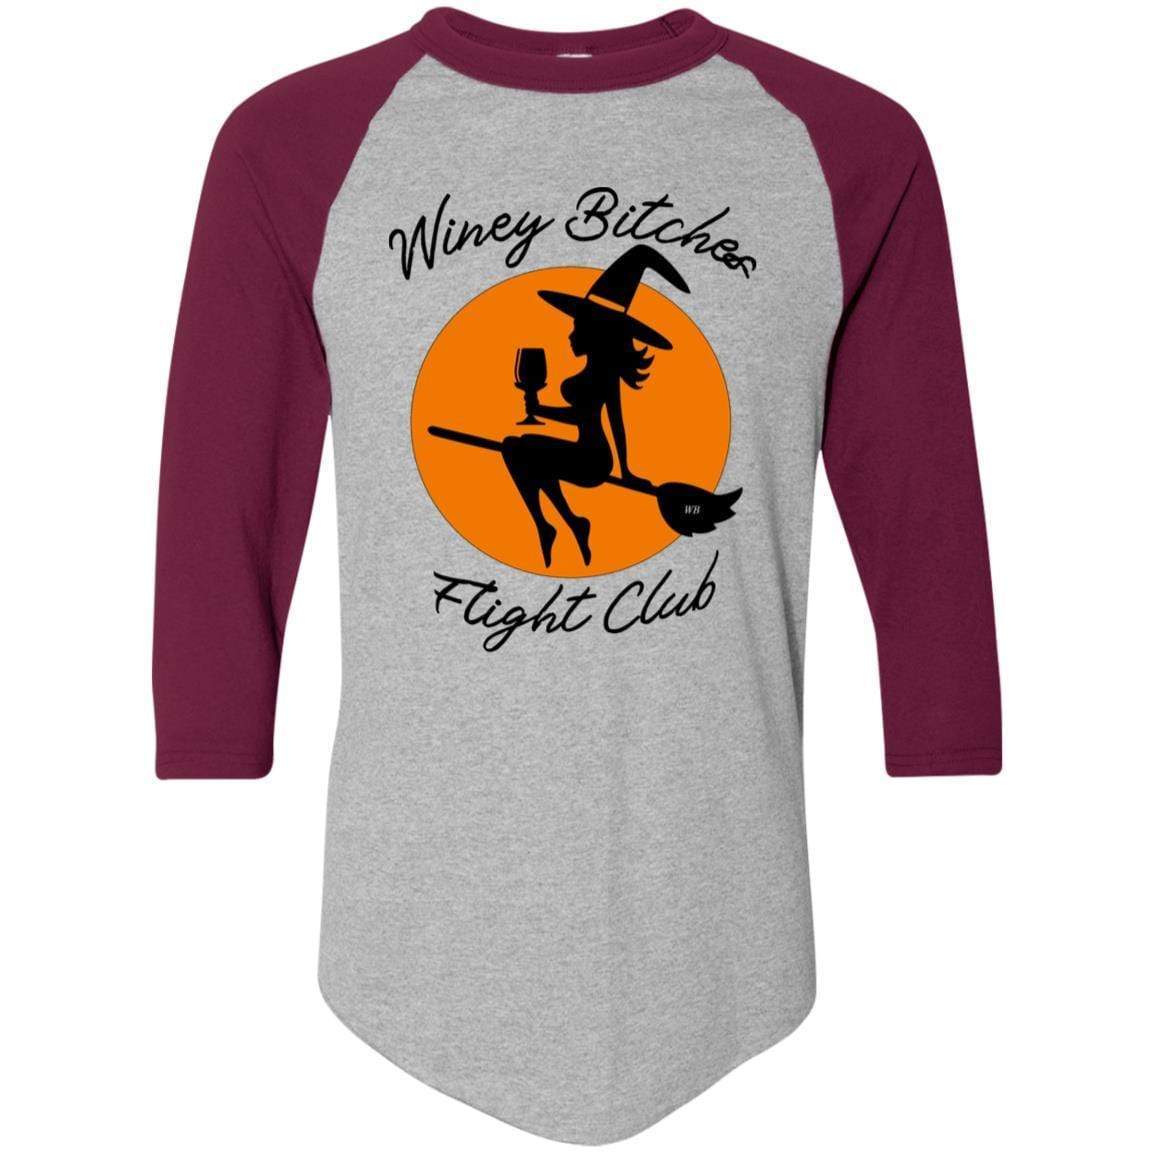 T-Shirts Athletic Heather/Maroon / S WineyBitches.Co "Winey Bitches Flight Club" Colorblock Raglan Jersey WineyBitchesCo